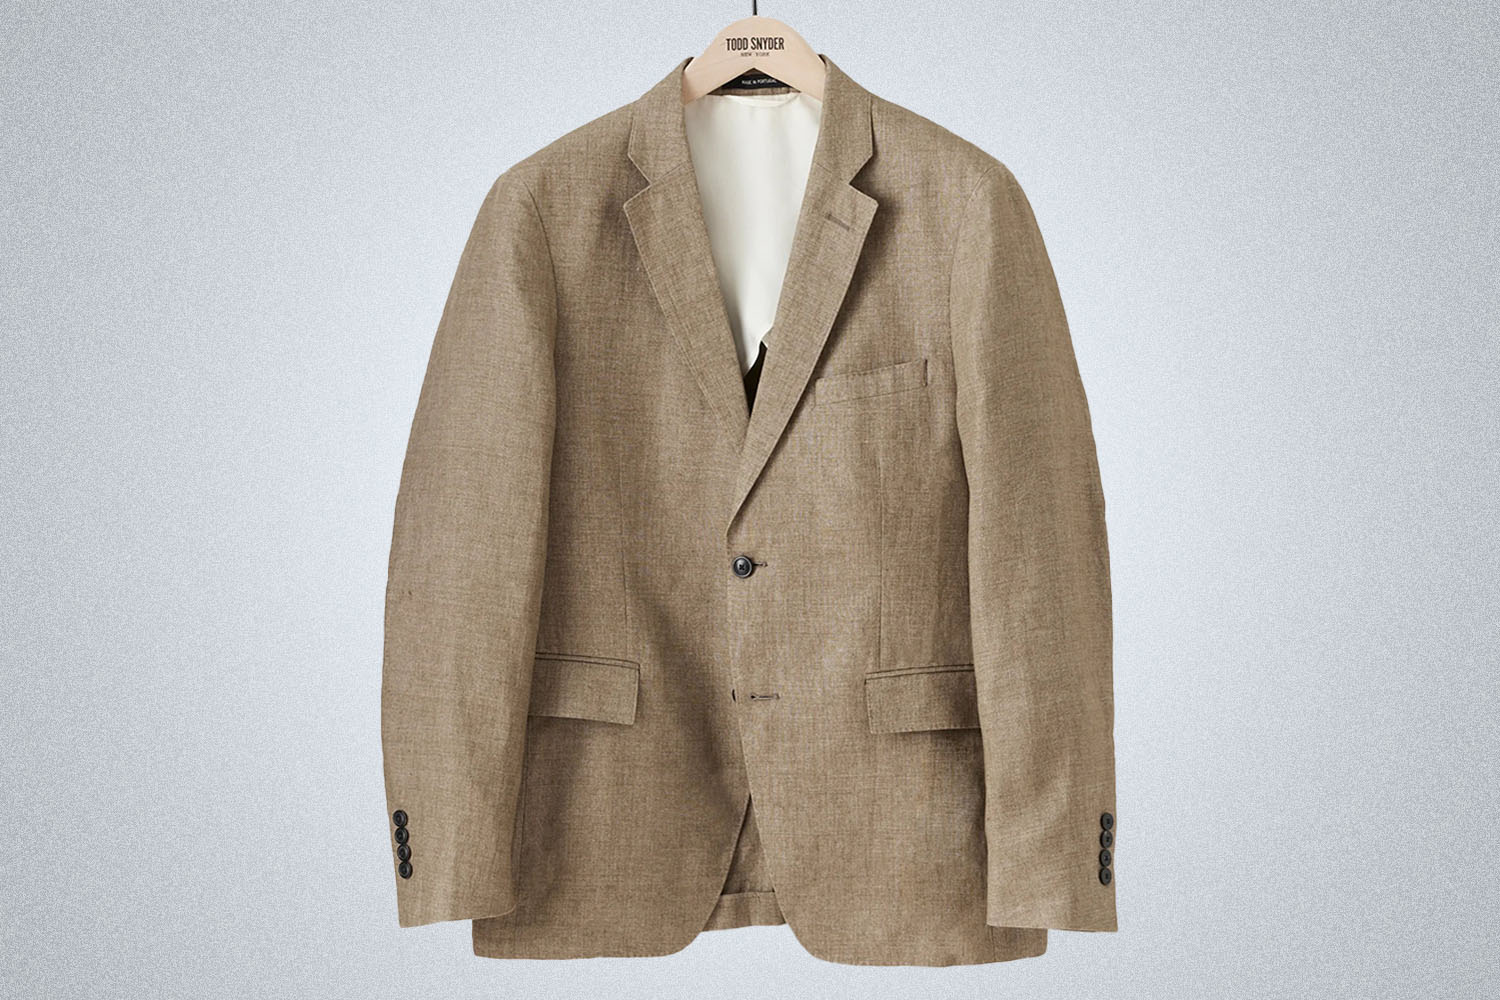 Todd Snyder Italian Linen Sutton Suit Jacket